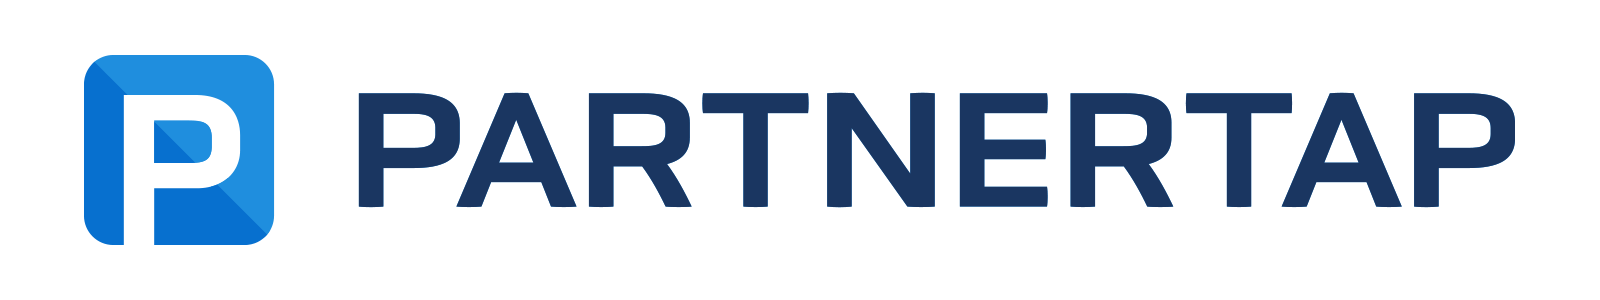 Partnertap logo